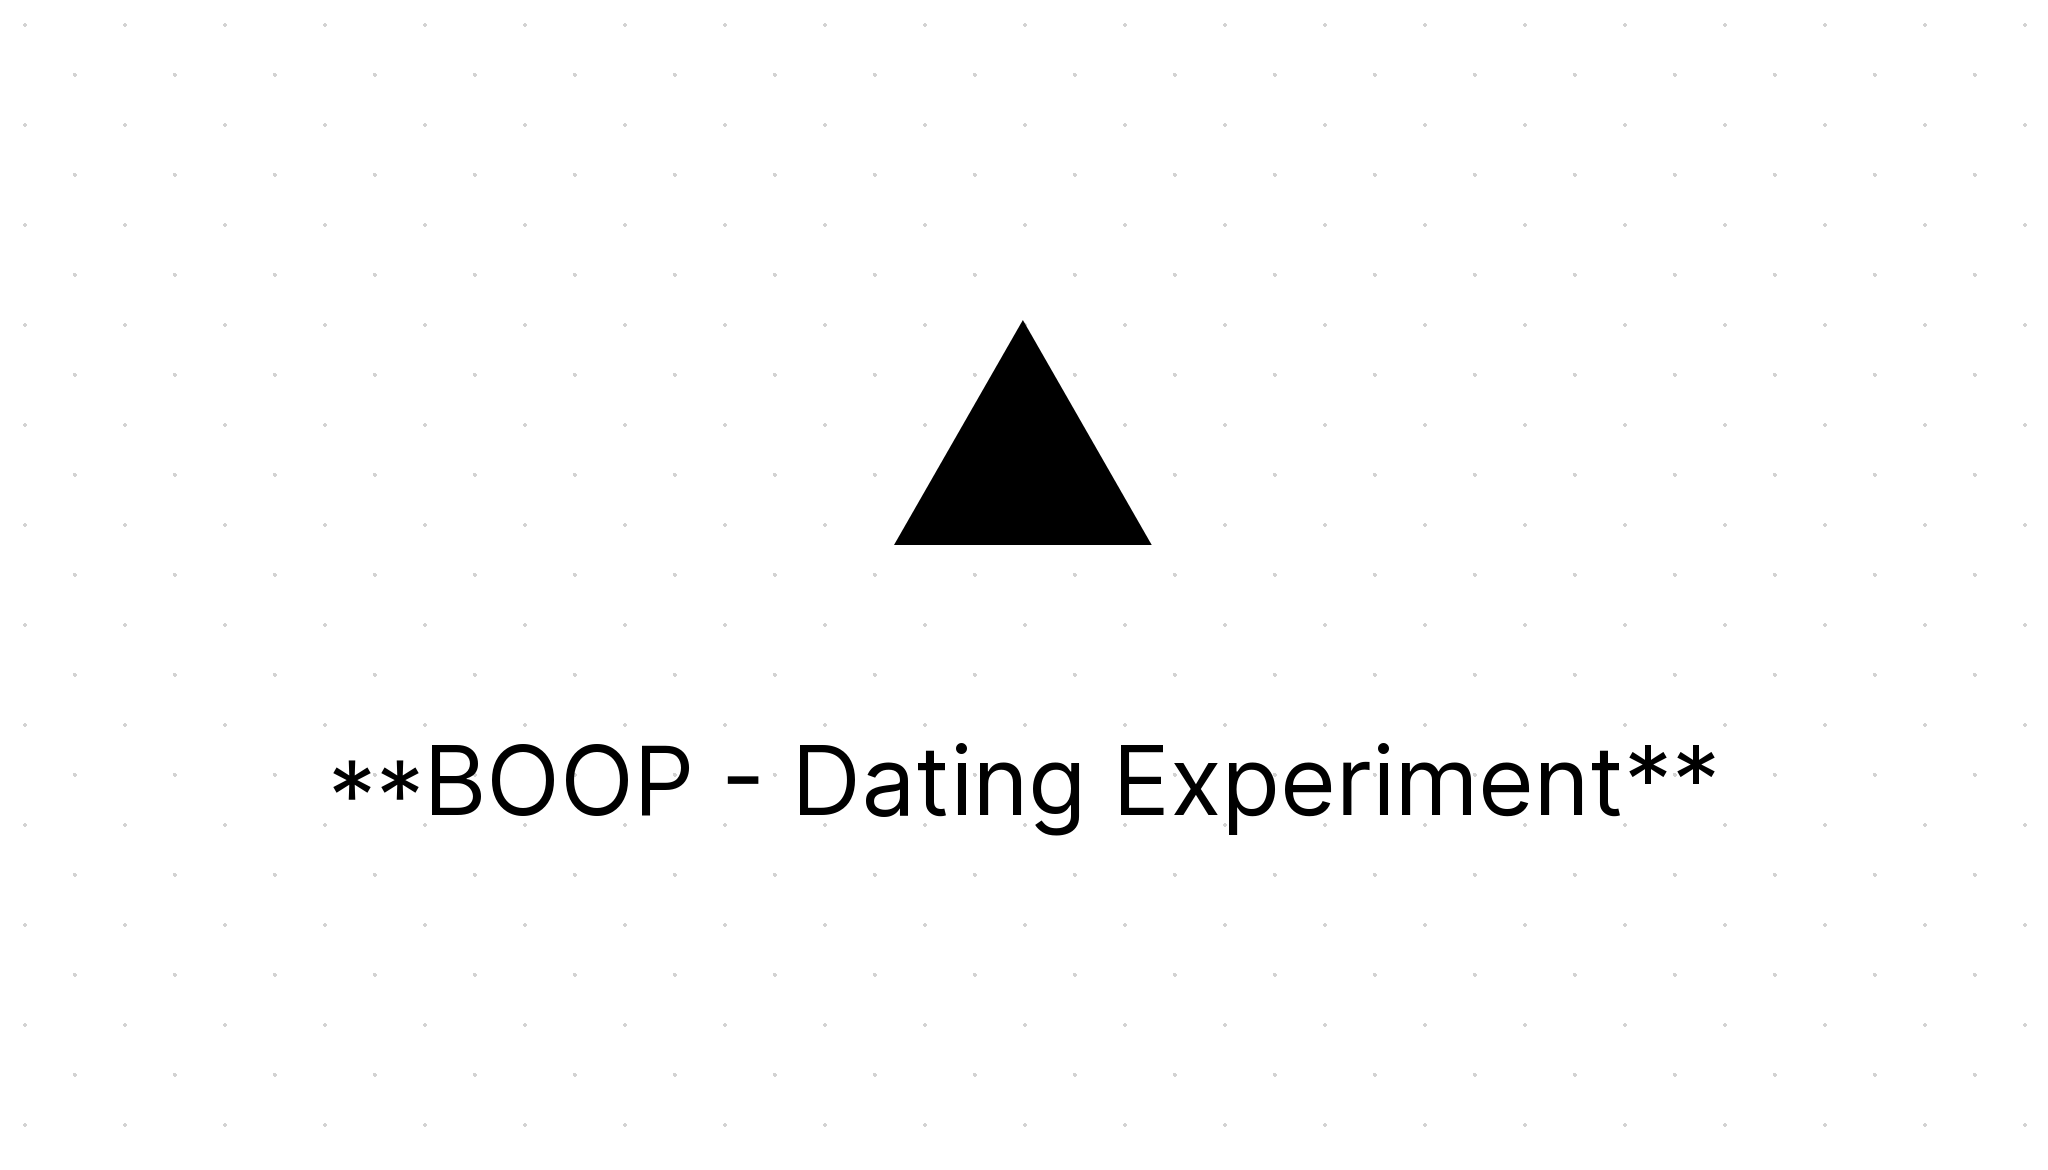 horizon online dating experiments